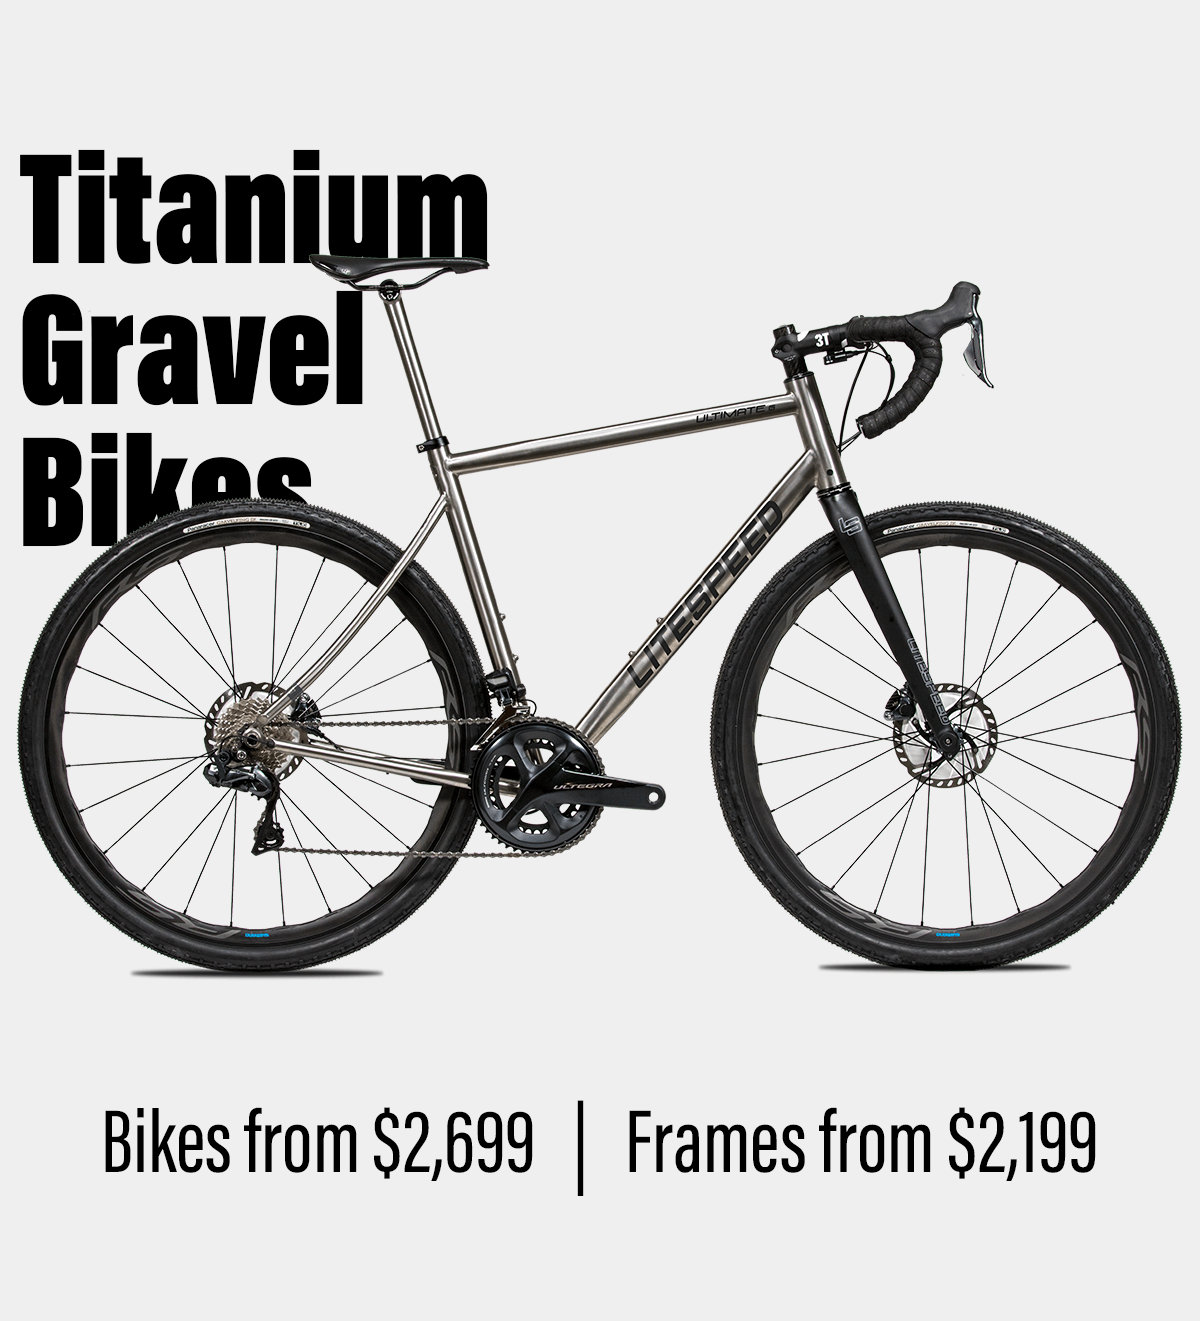 Titanium Gravel Bikes starting at $2,699